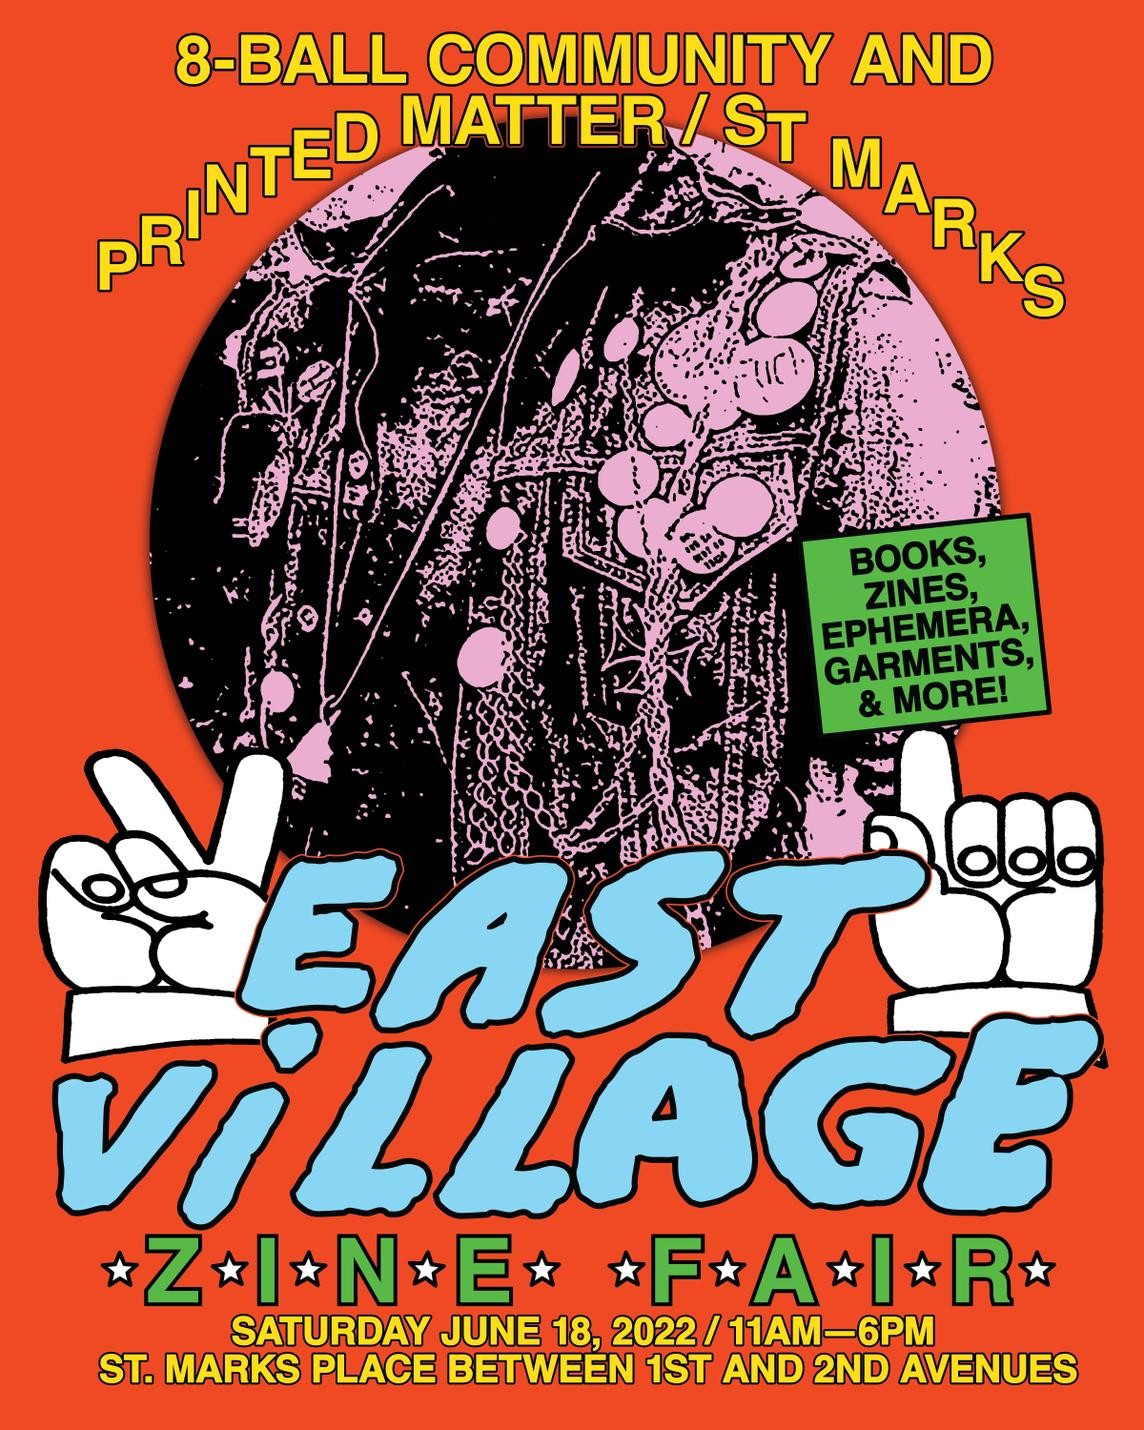 East Village Zine Fair 8-Ball Community Printed Matter 